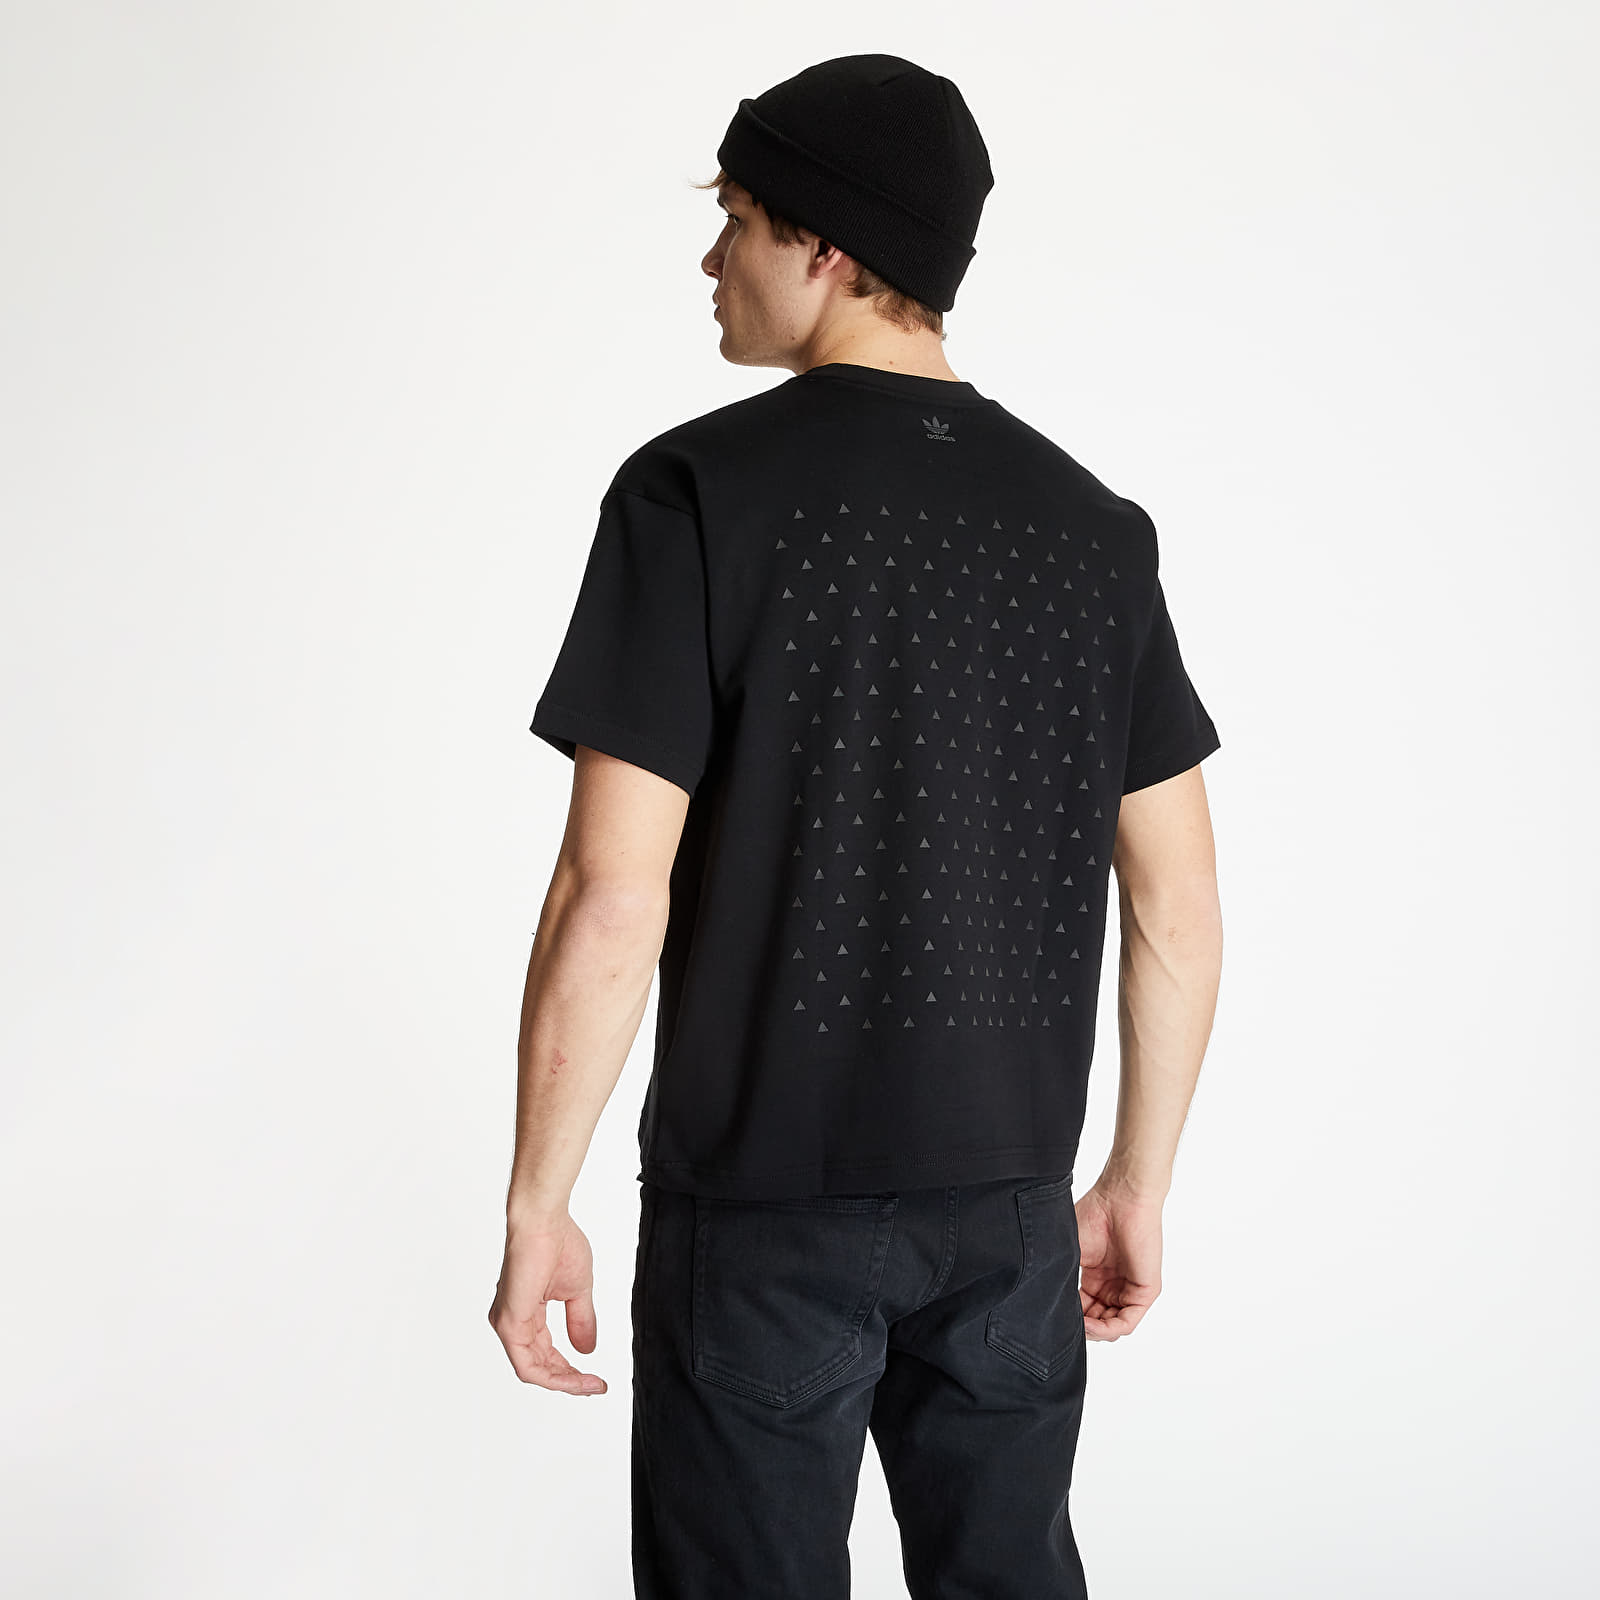 T-shirts adidas x Pharrell Williams Premium Basics Shirt Black